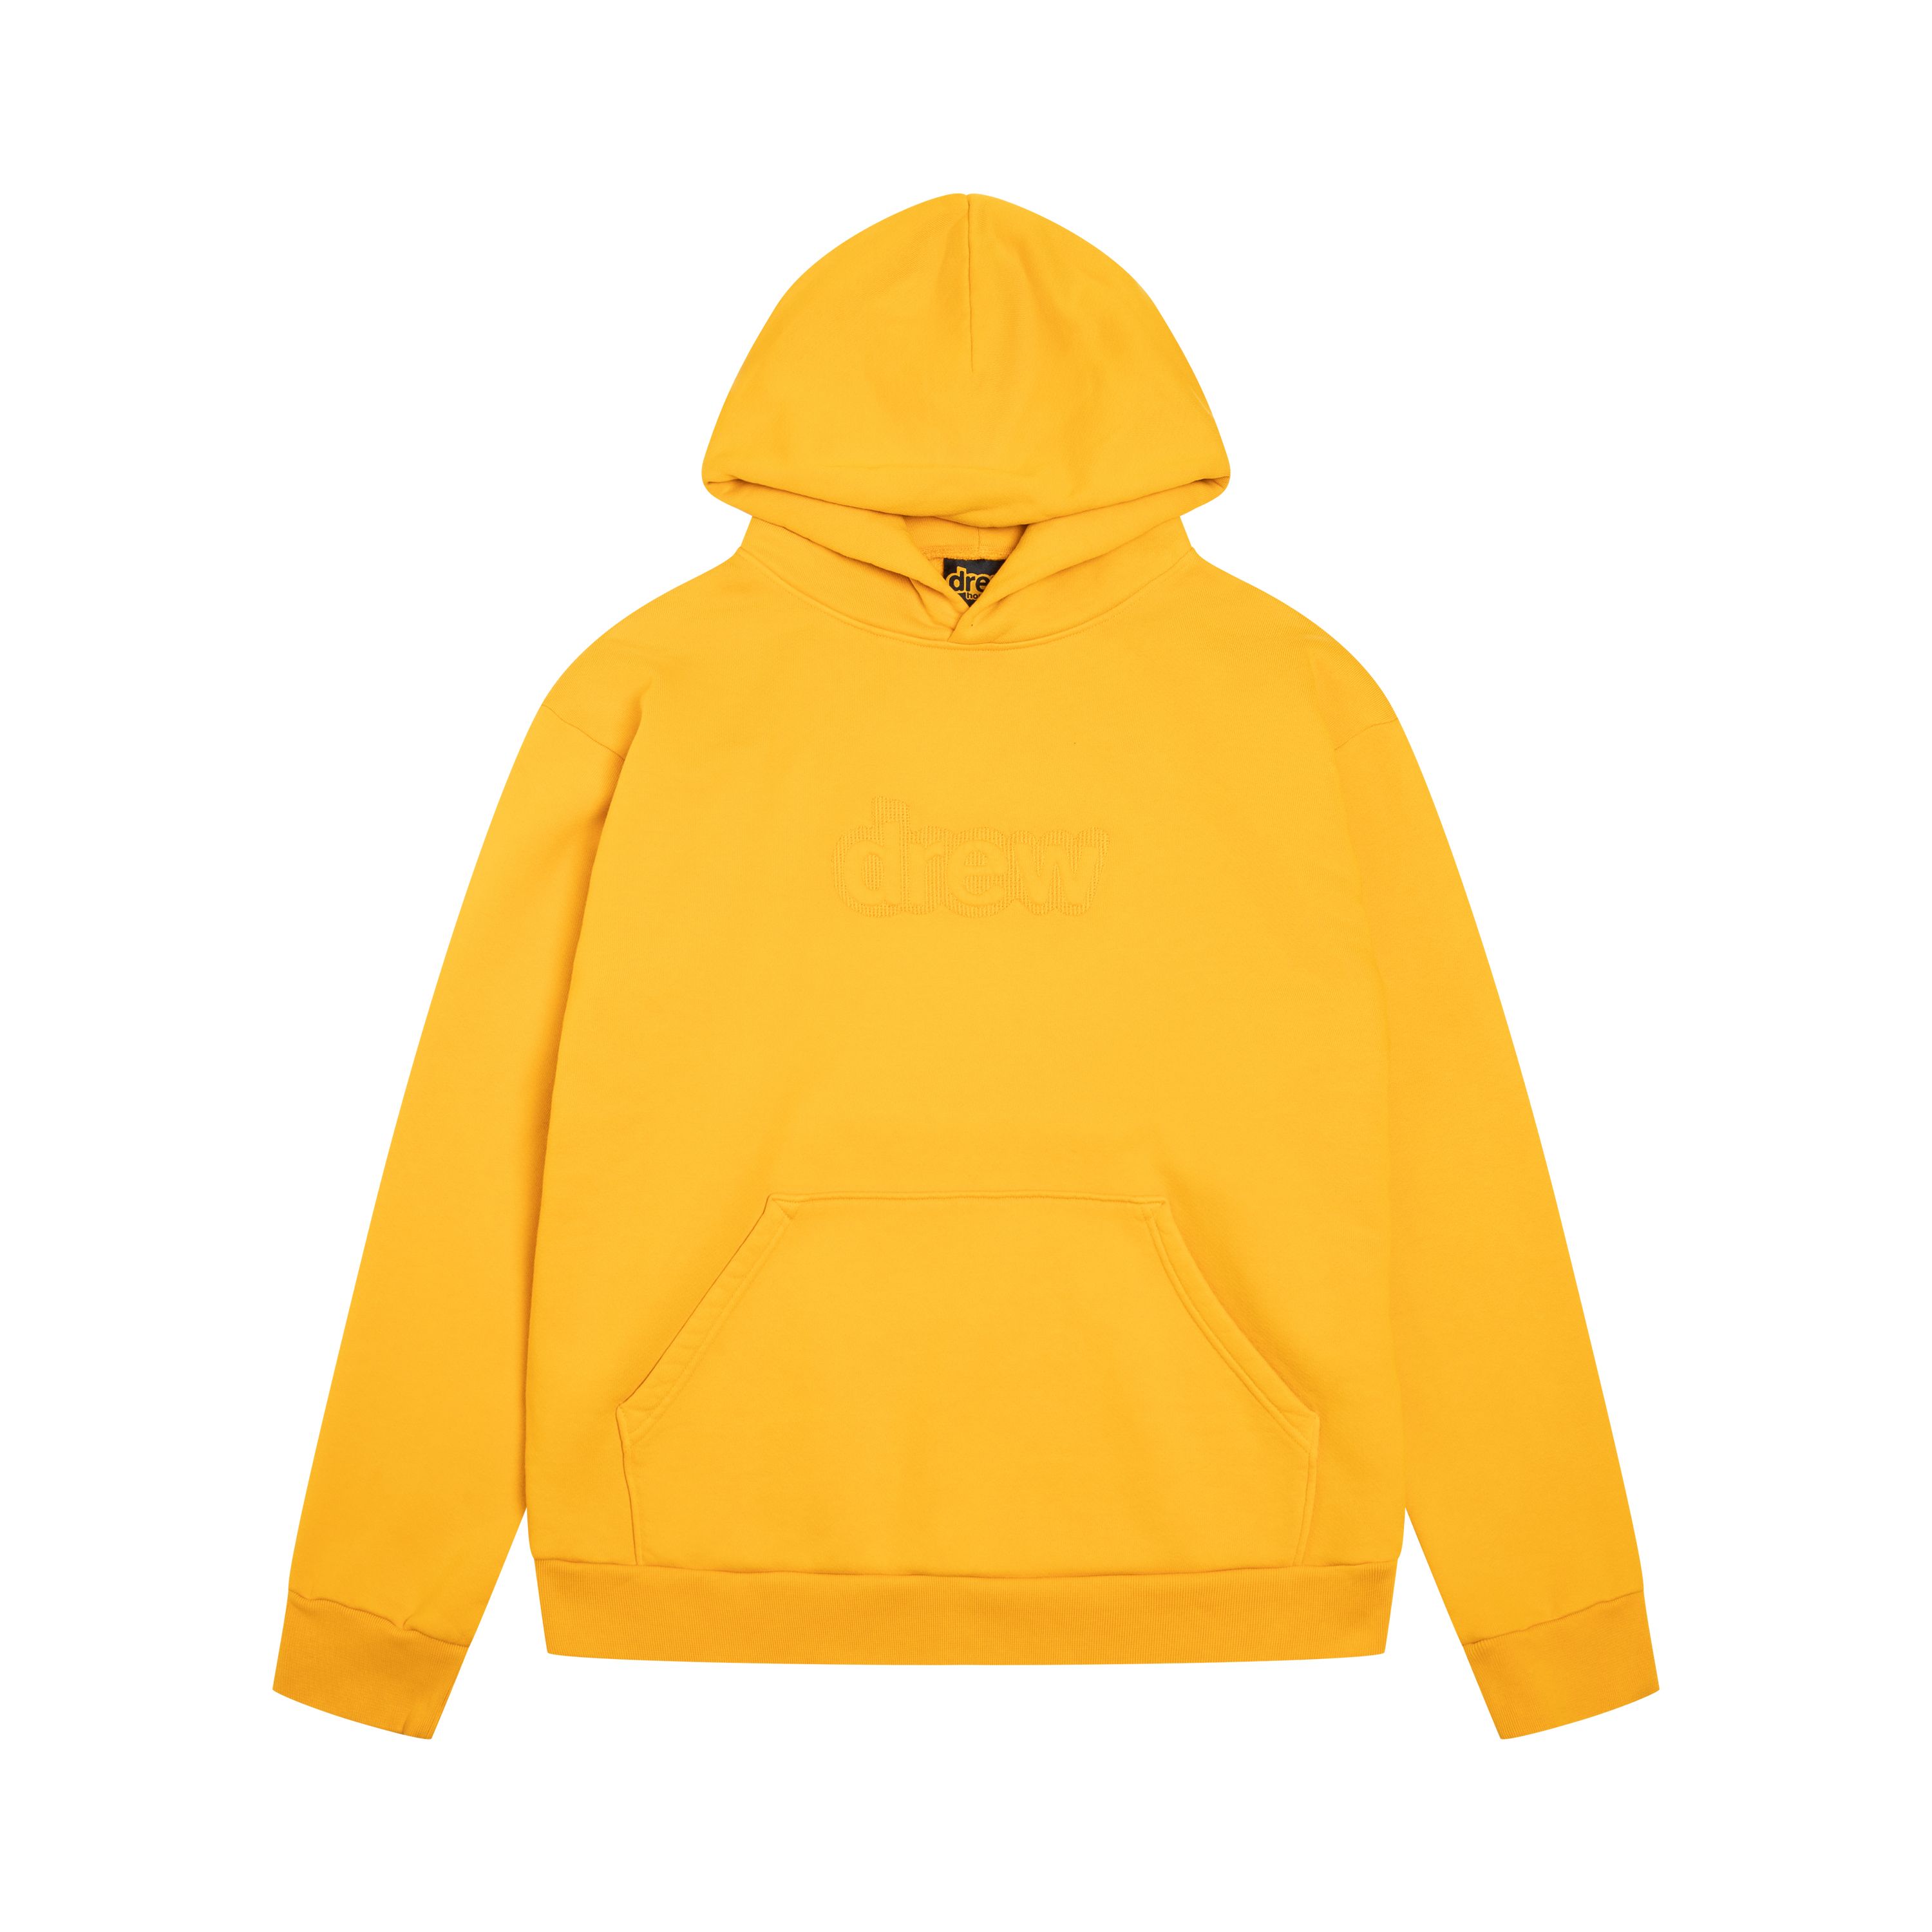 drew house hoodie "Golden Yellow"